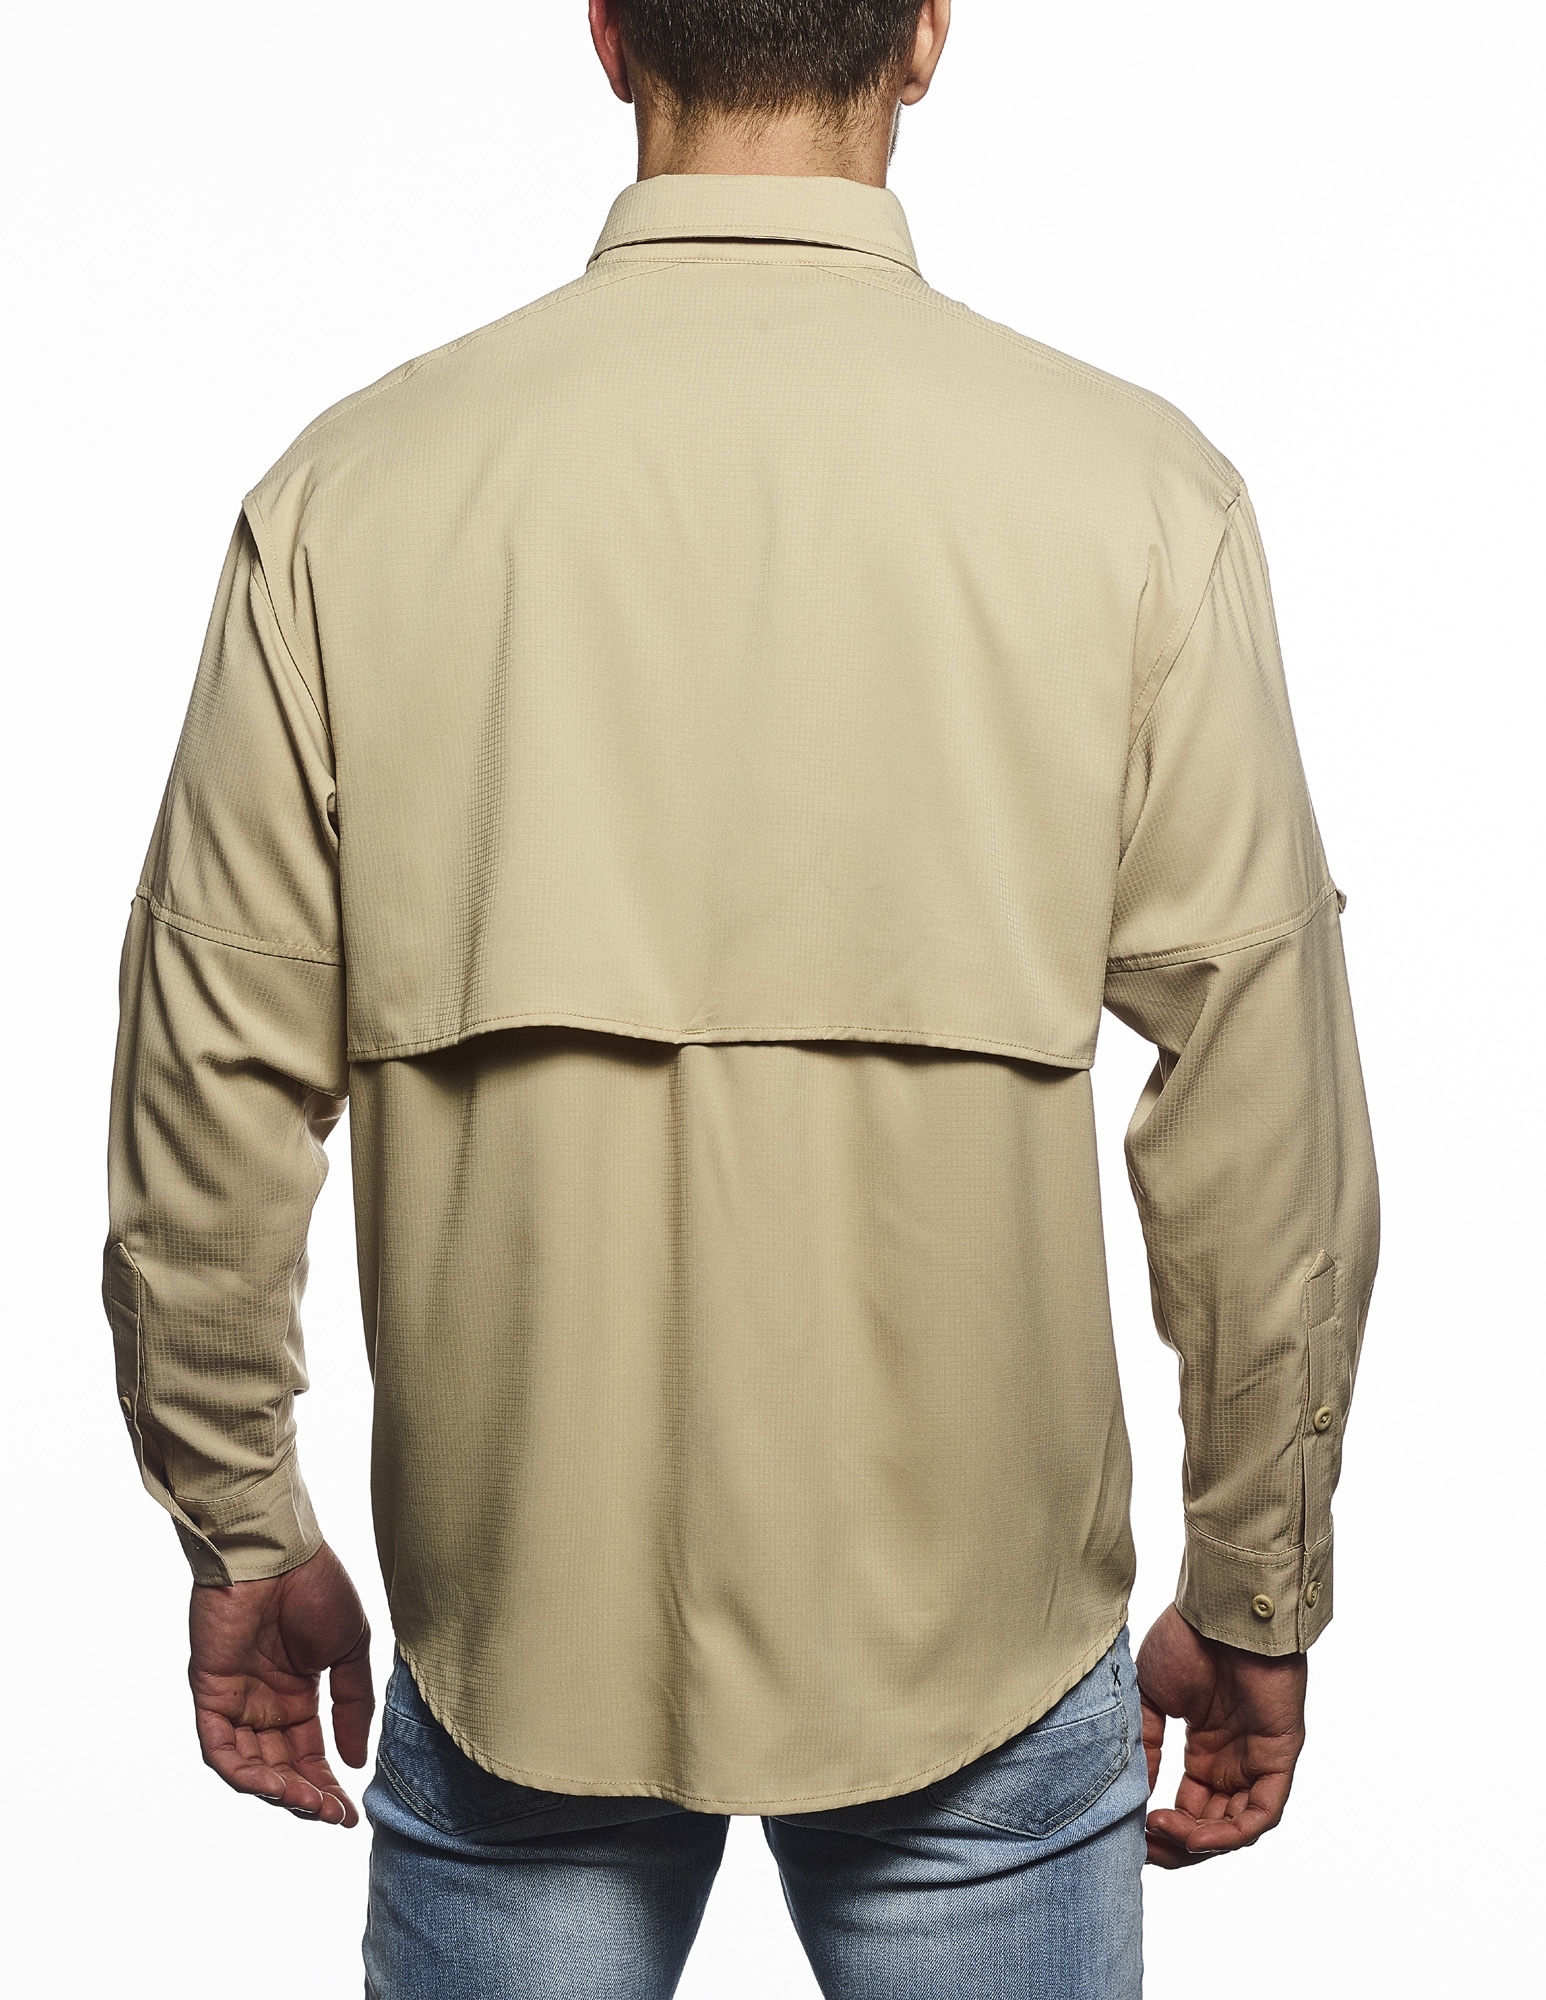 Pro Celebrity FS9889 Long Sleeve Pro Fishing Shirts